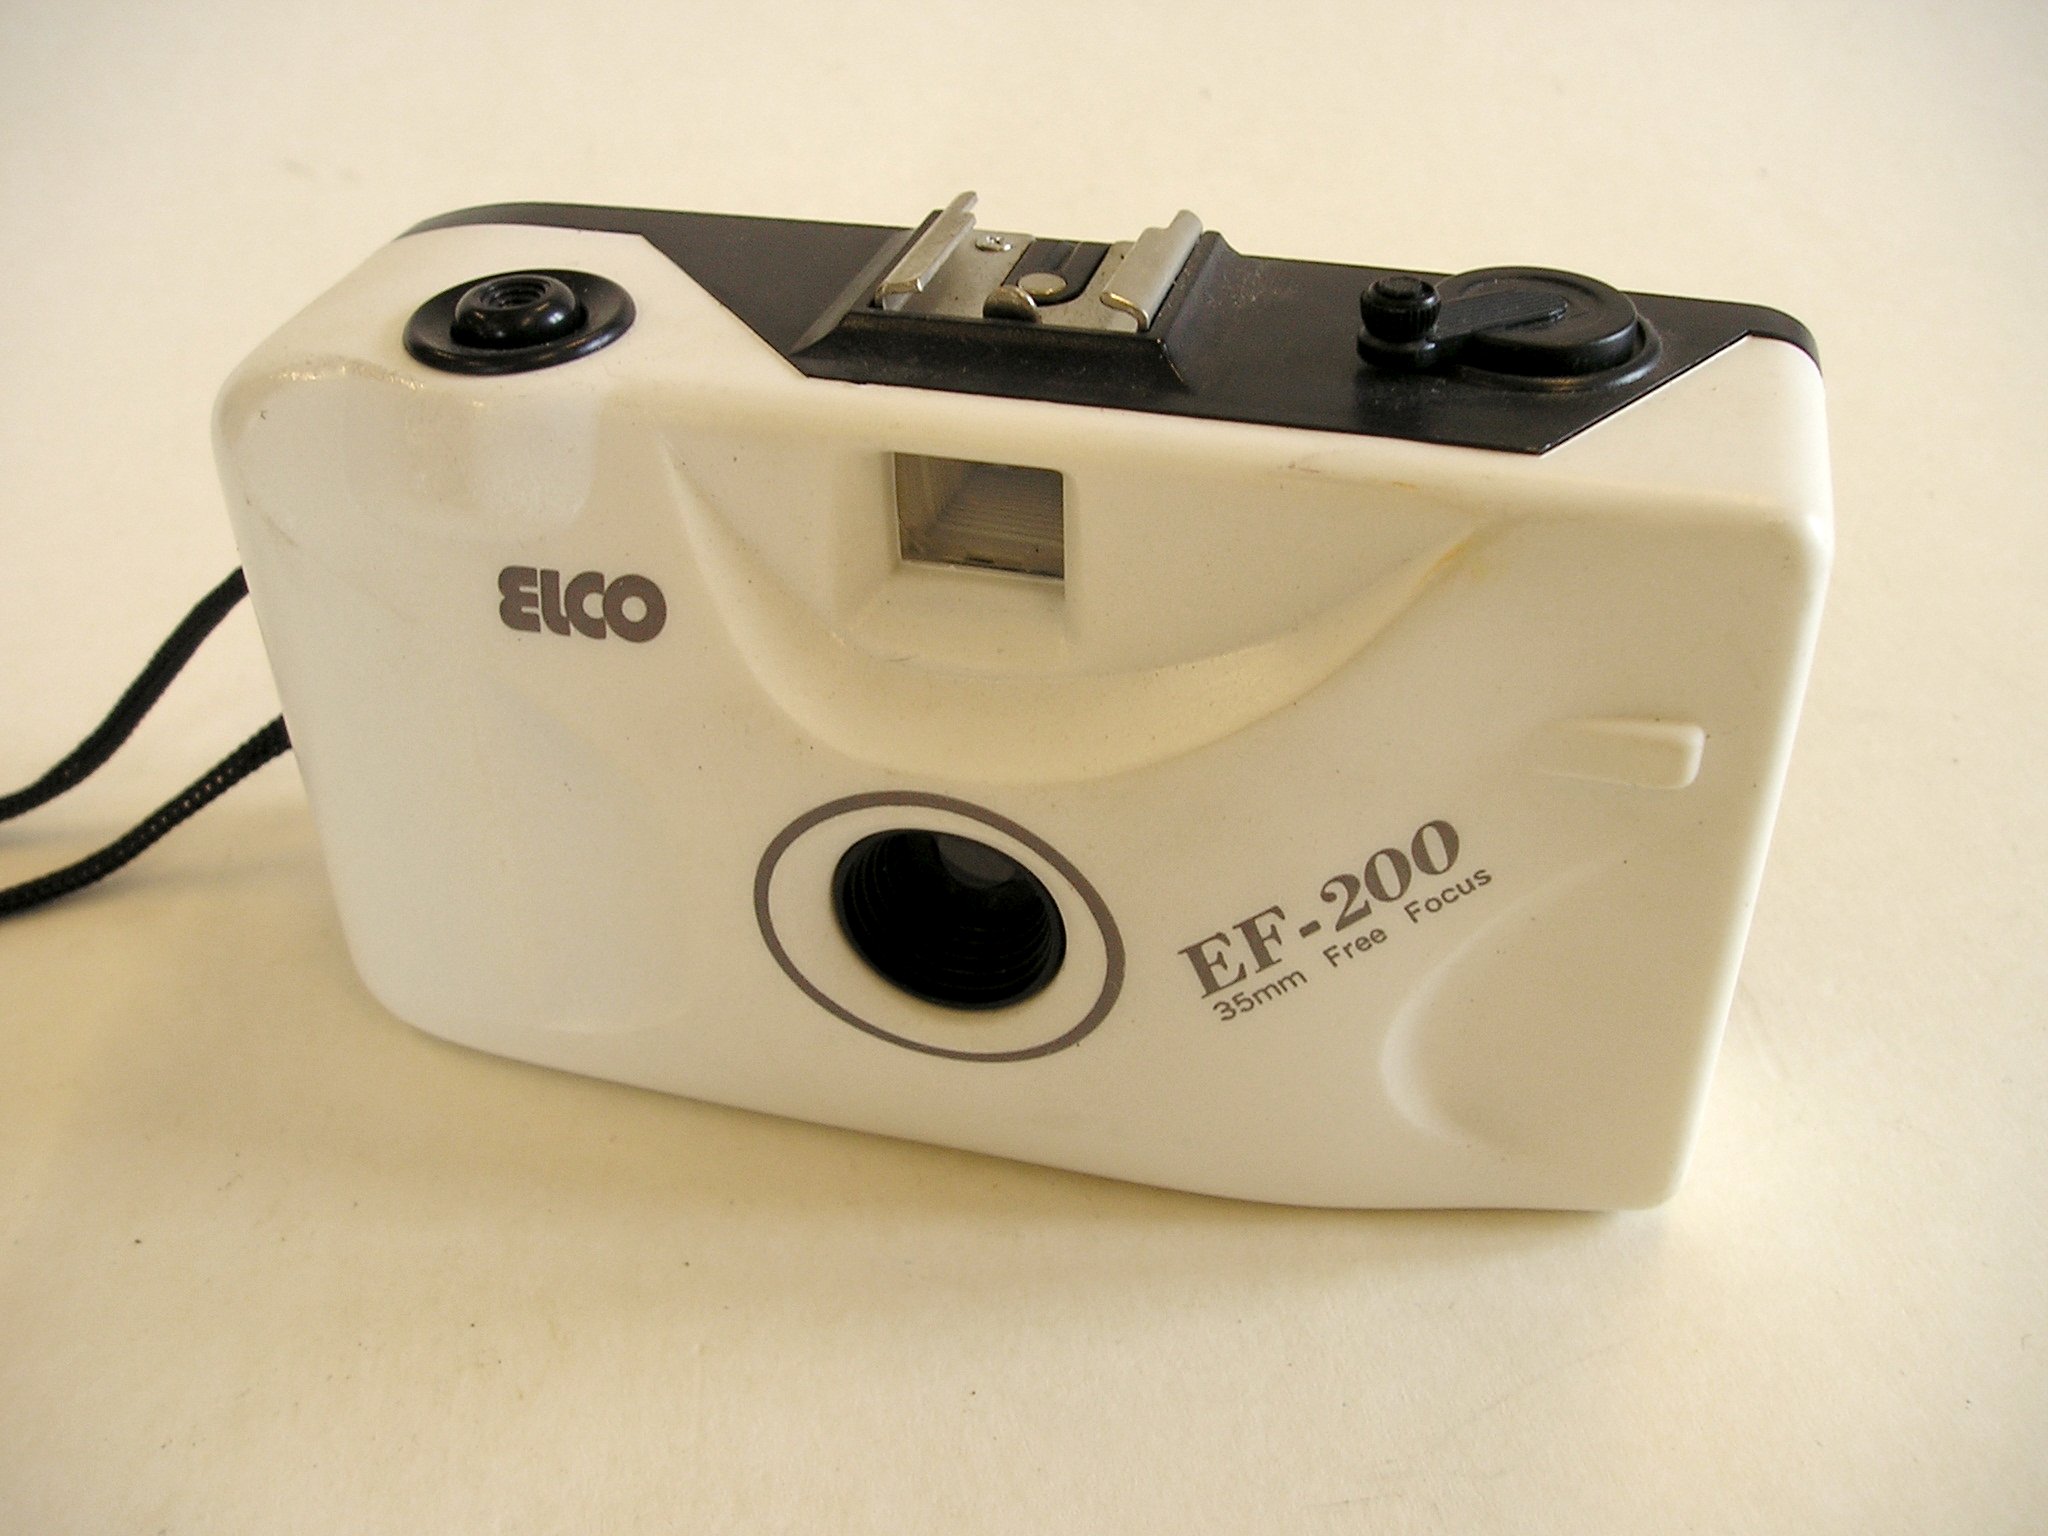 Elco ef-200 DOVE